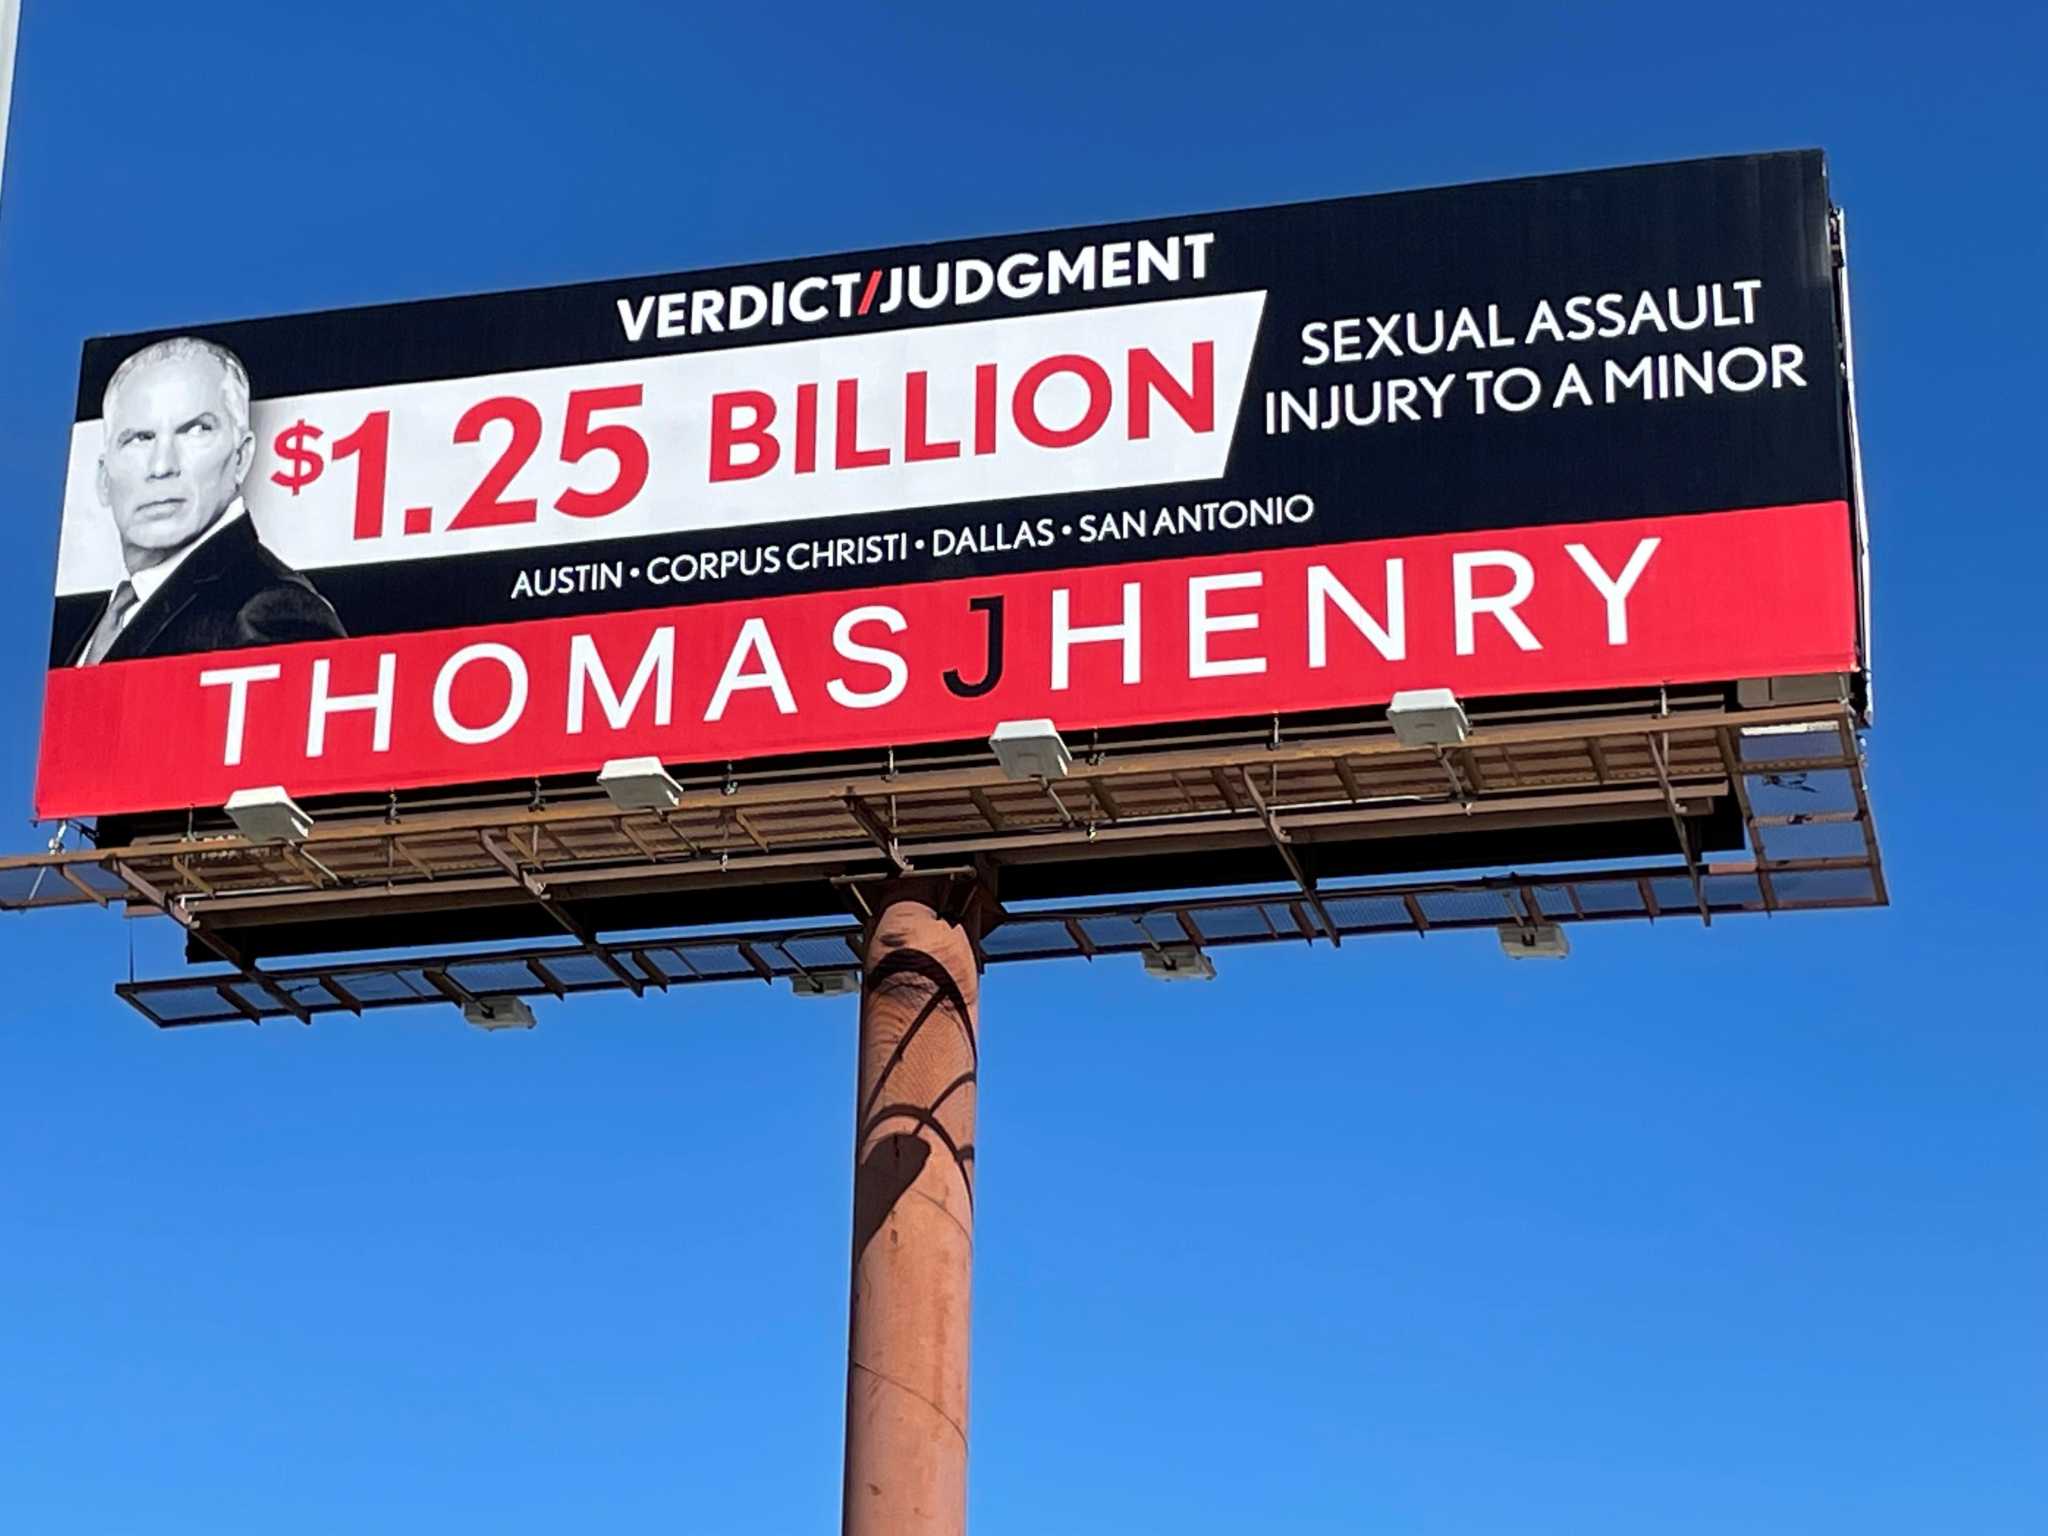 San Antonio lawyer Thomas J. Henry can no longer advertise 1.25